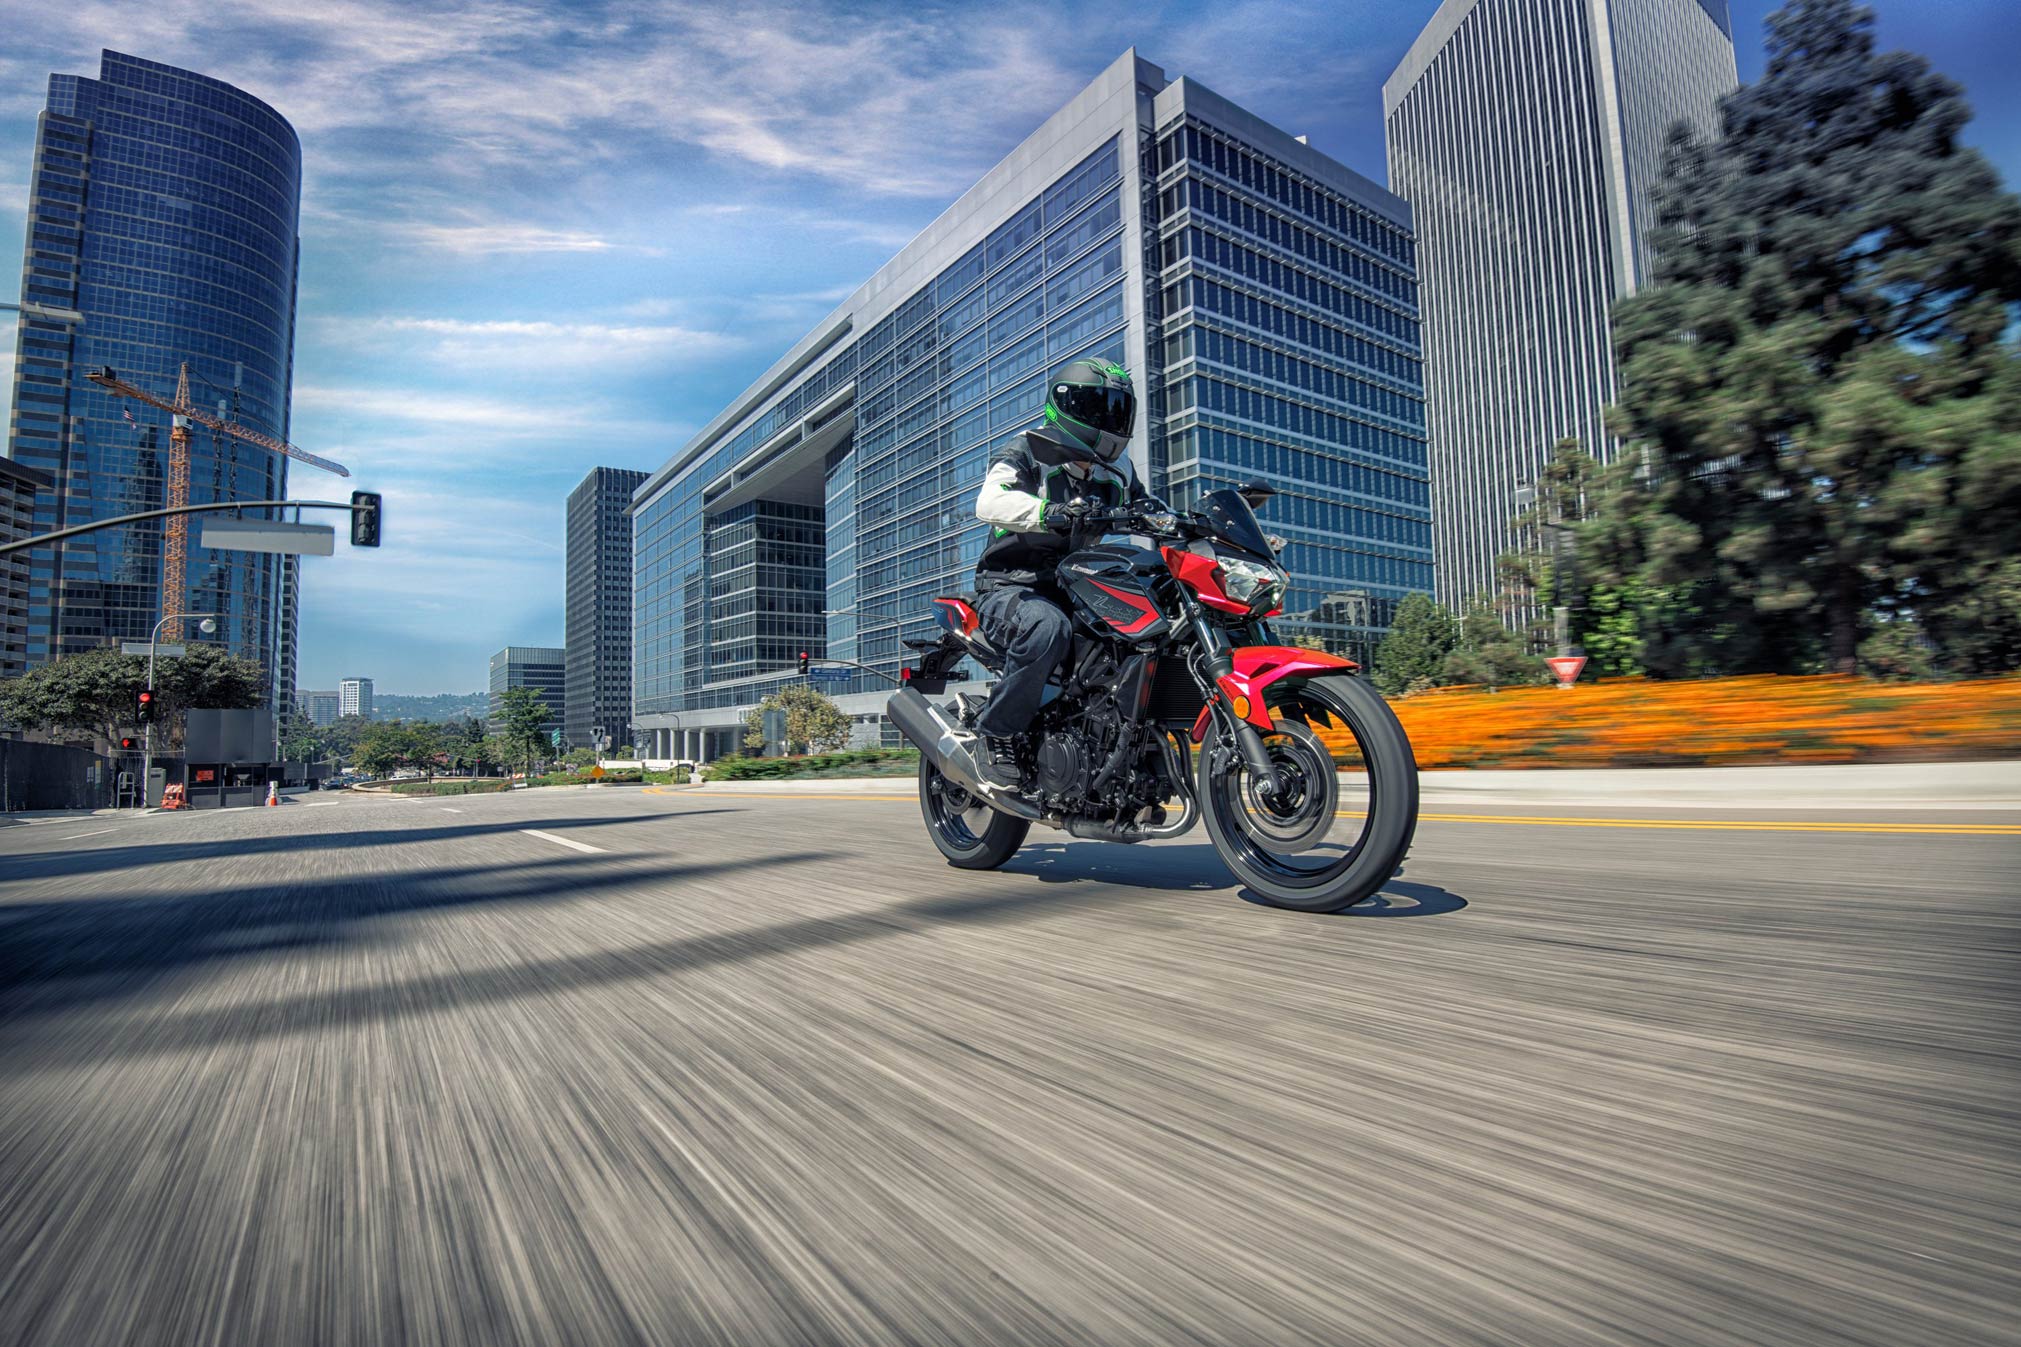 2021 Kawasaki Z400 ABS Guide • Total Motorcycle